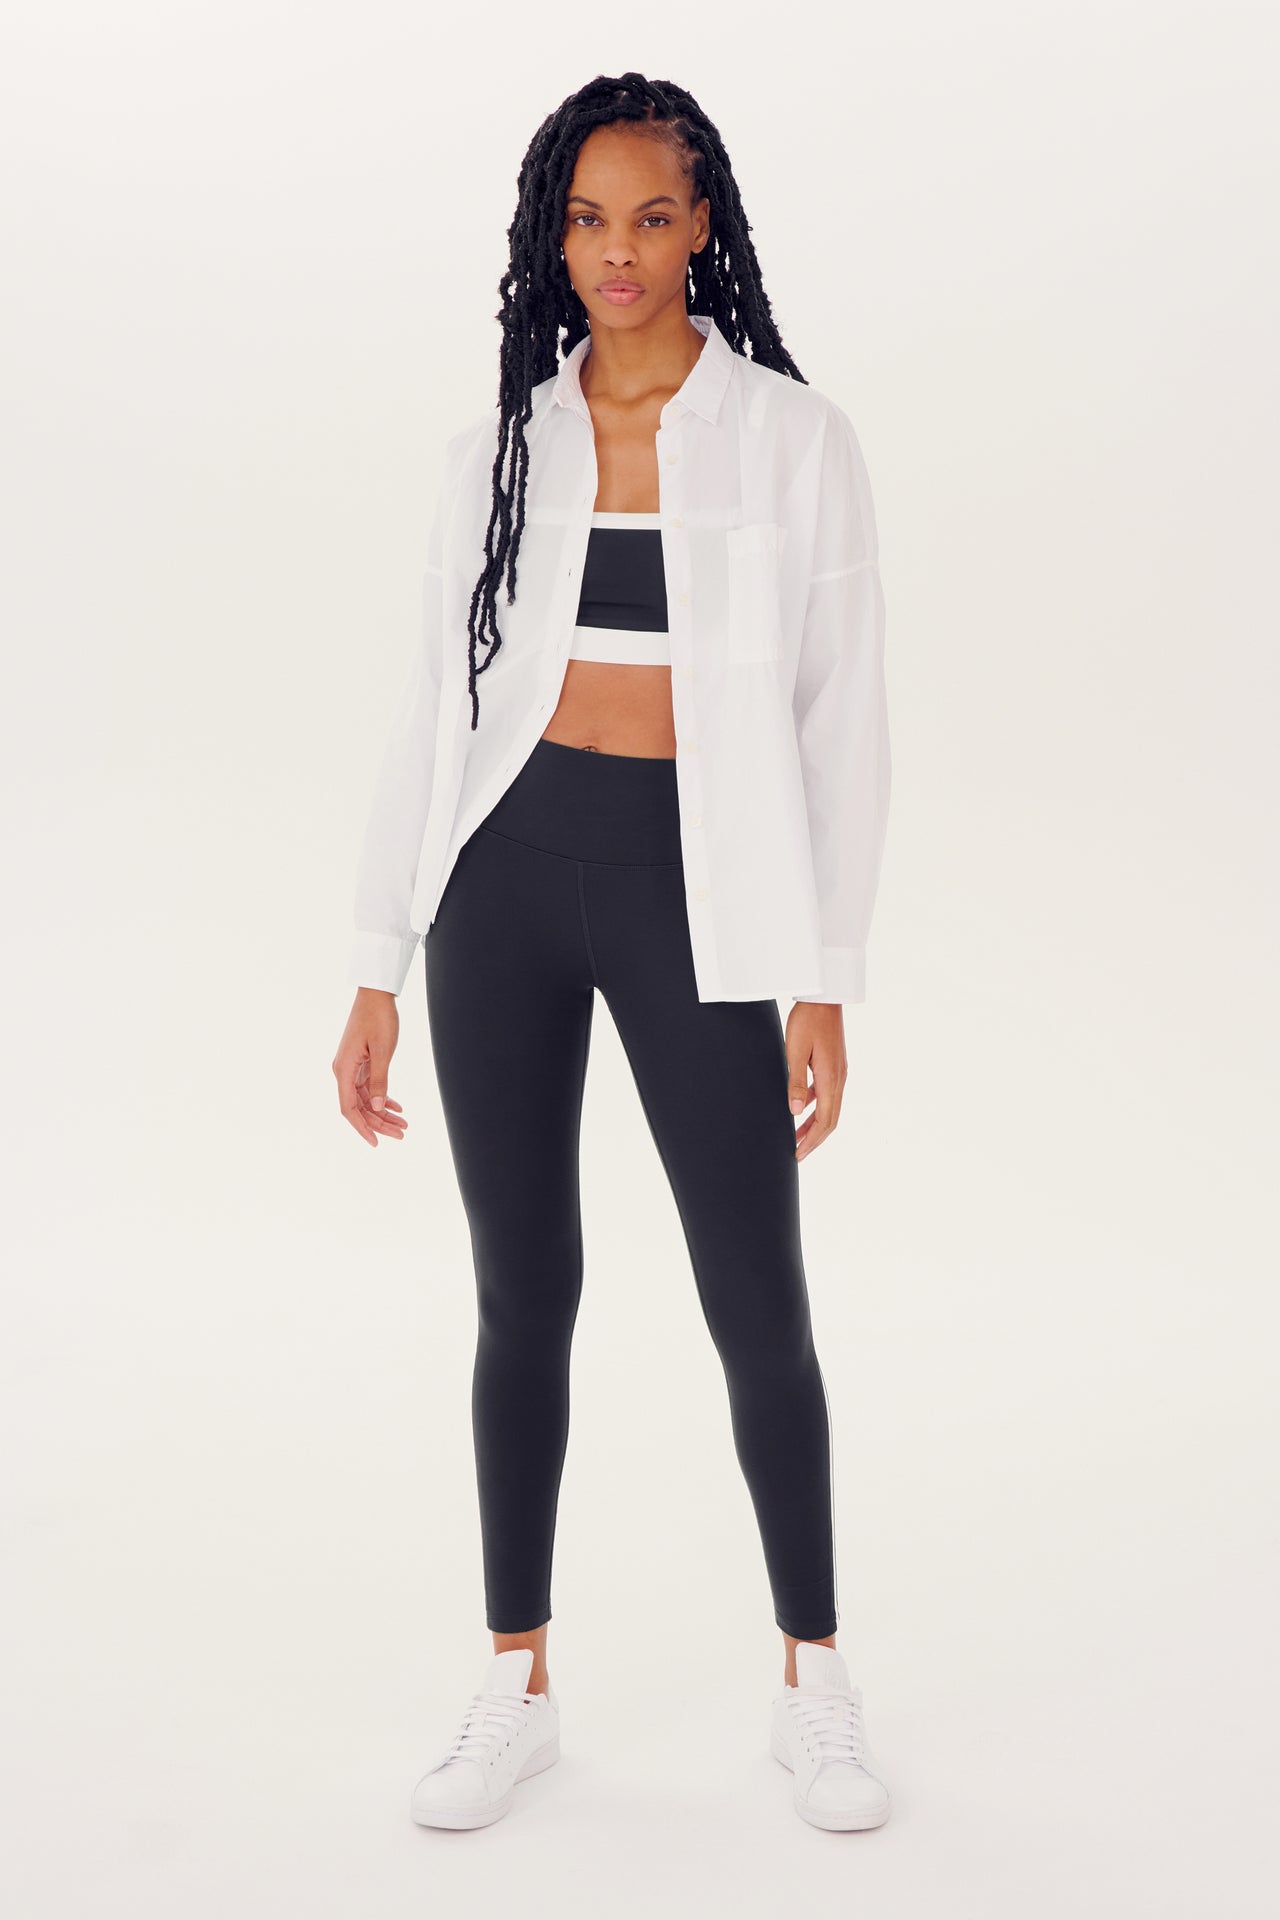 Woman posing in an oversized Alex Mill x Splits59 Jo Shirt - White, black leggings, and white sneakers.